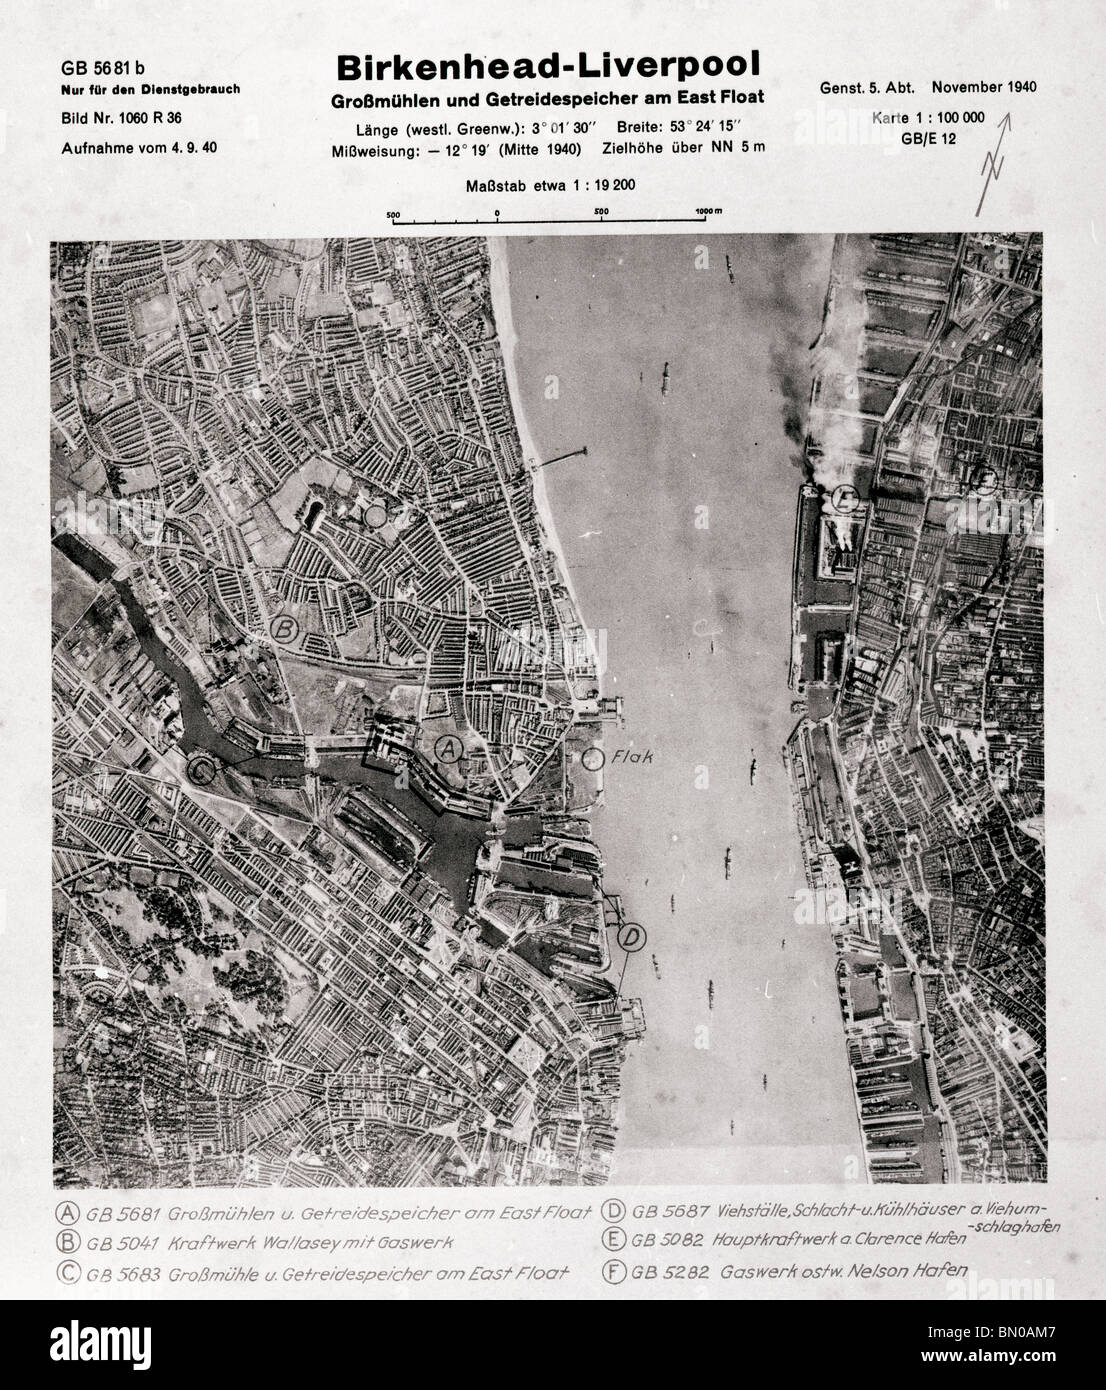 Birkenhead - Liverpool 1940 Docks Ship Canal Luftwaffe Aerial Image Stock Photo